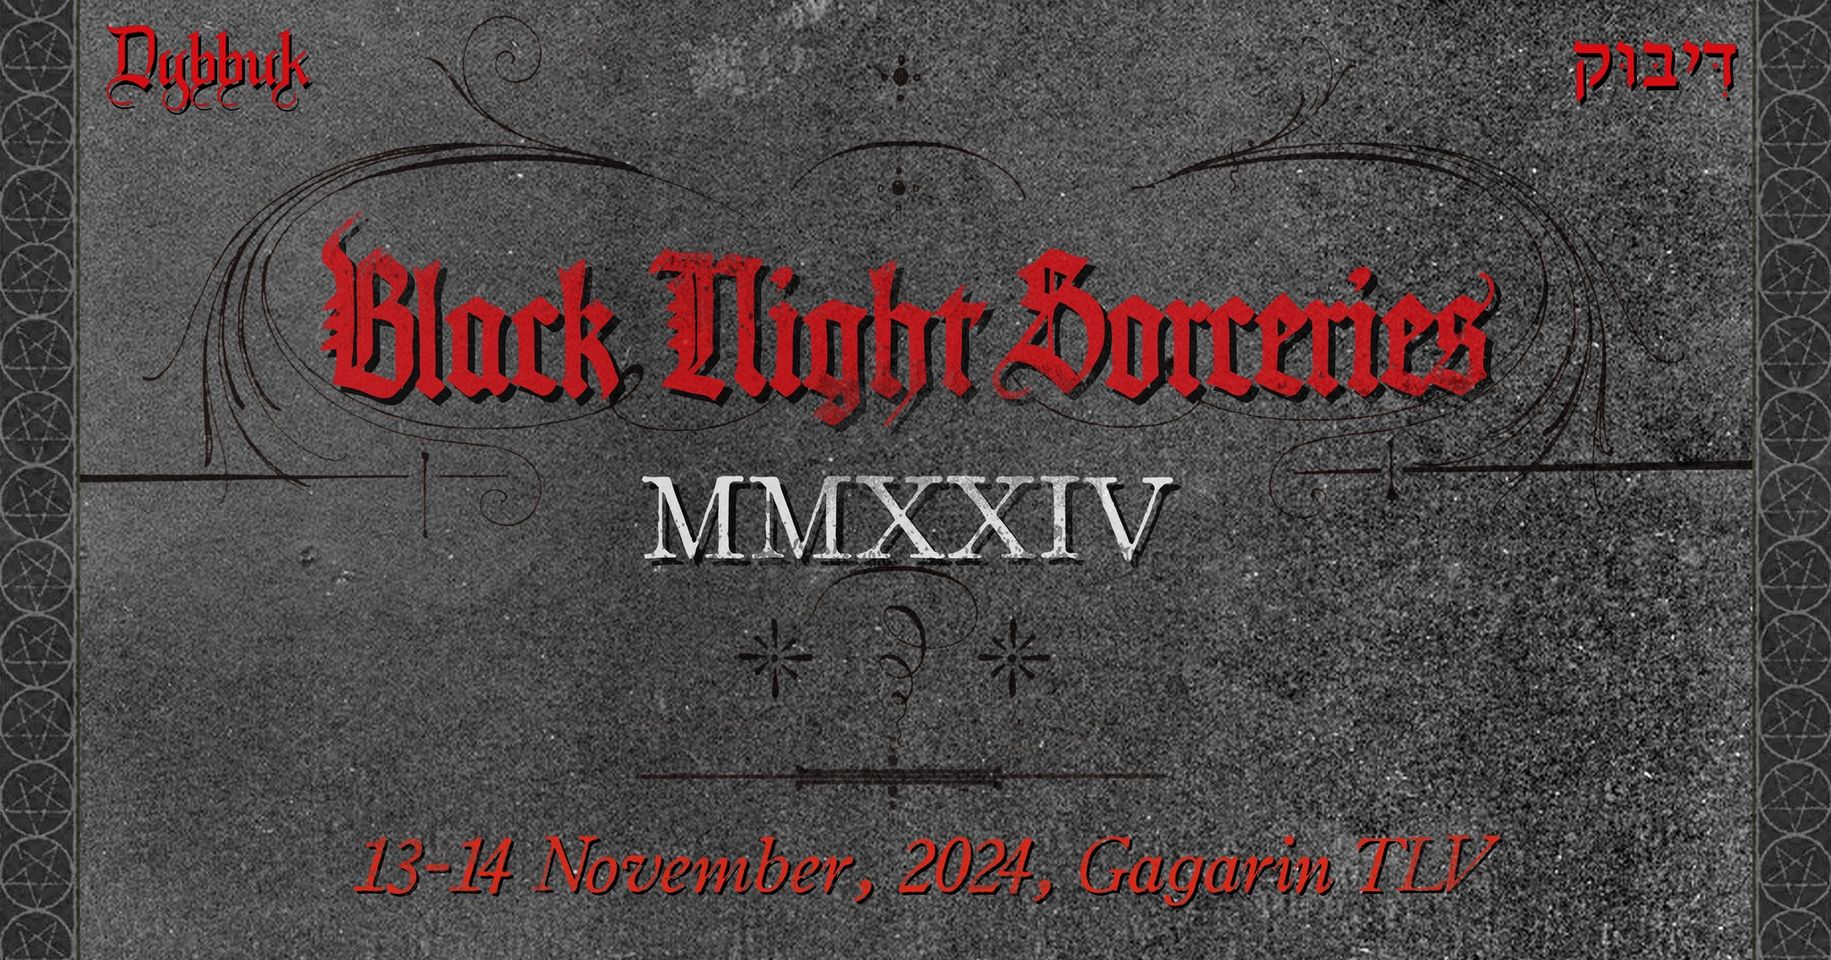 Black Night Sorceries Festival MMXXIV